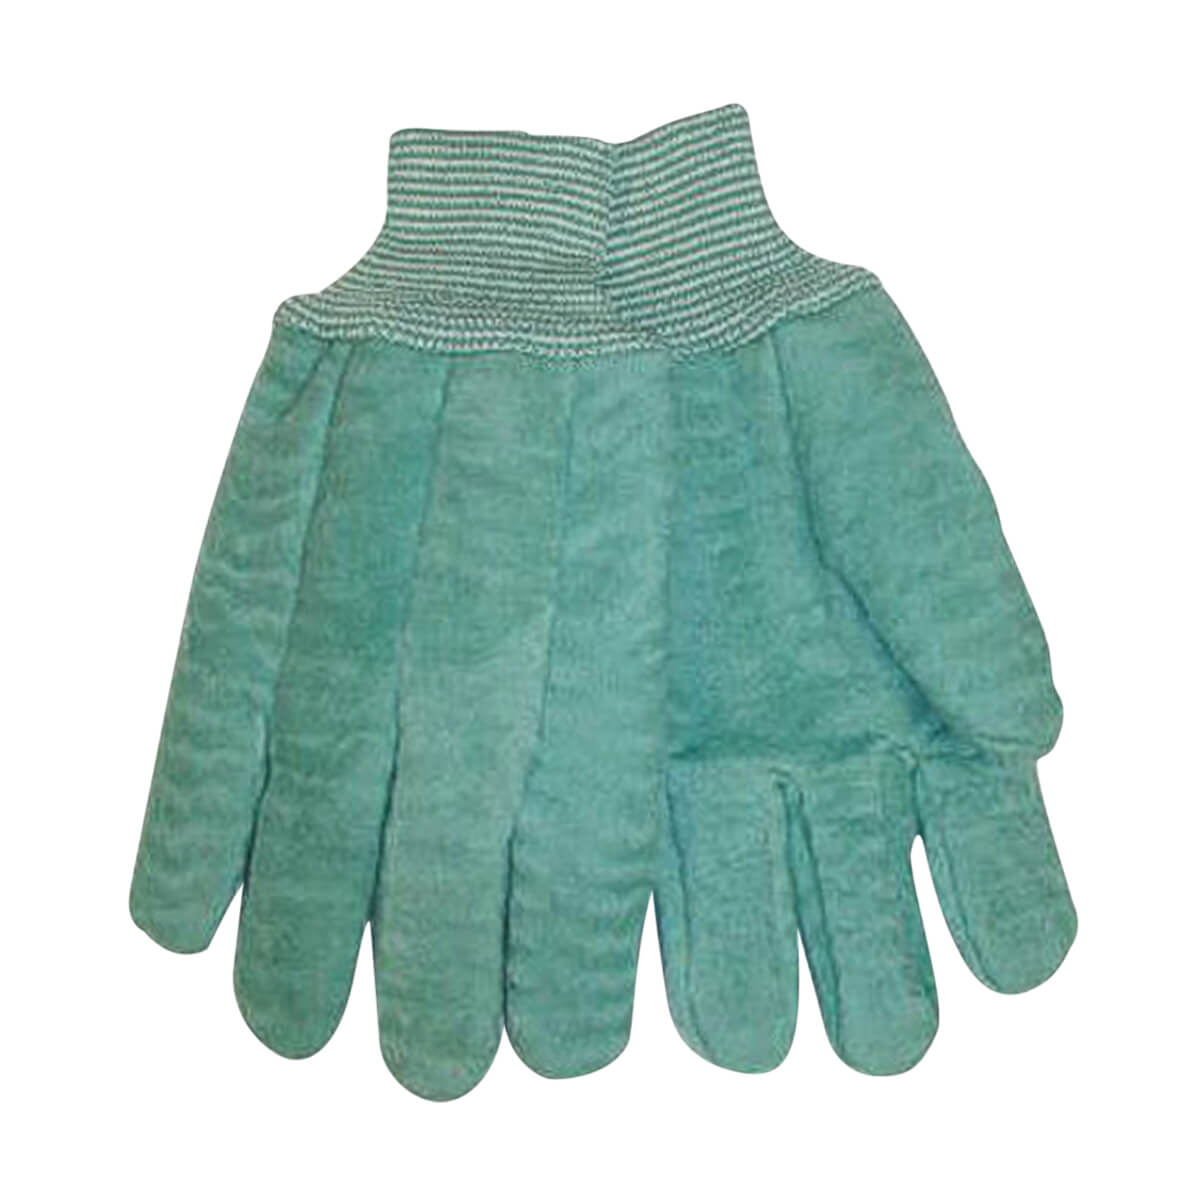 Super Green King Gloves